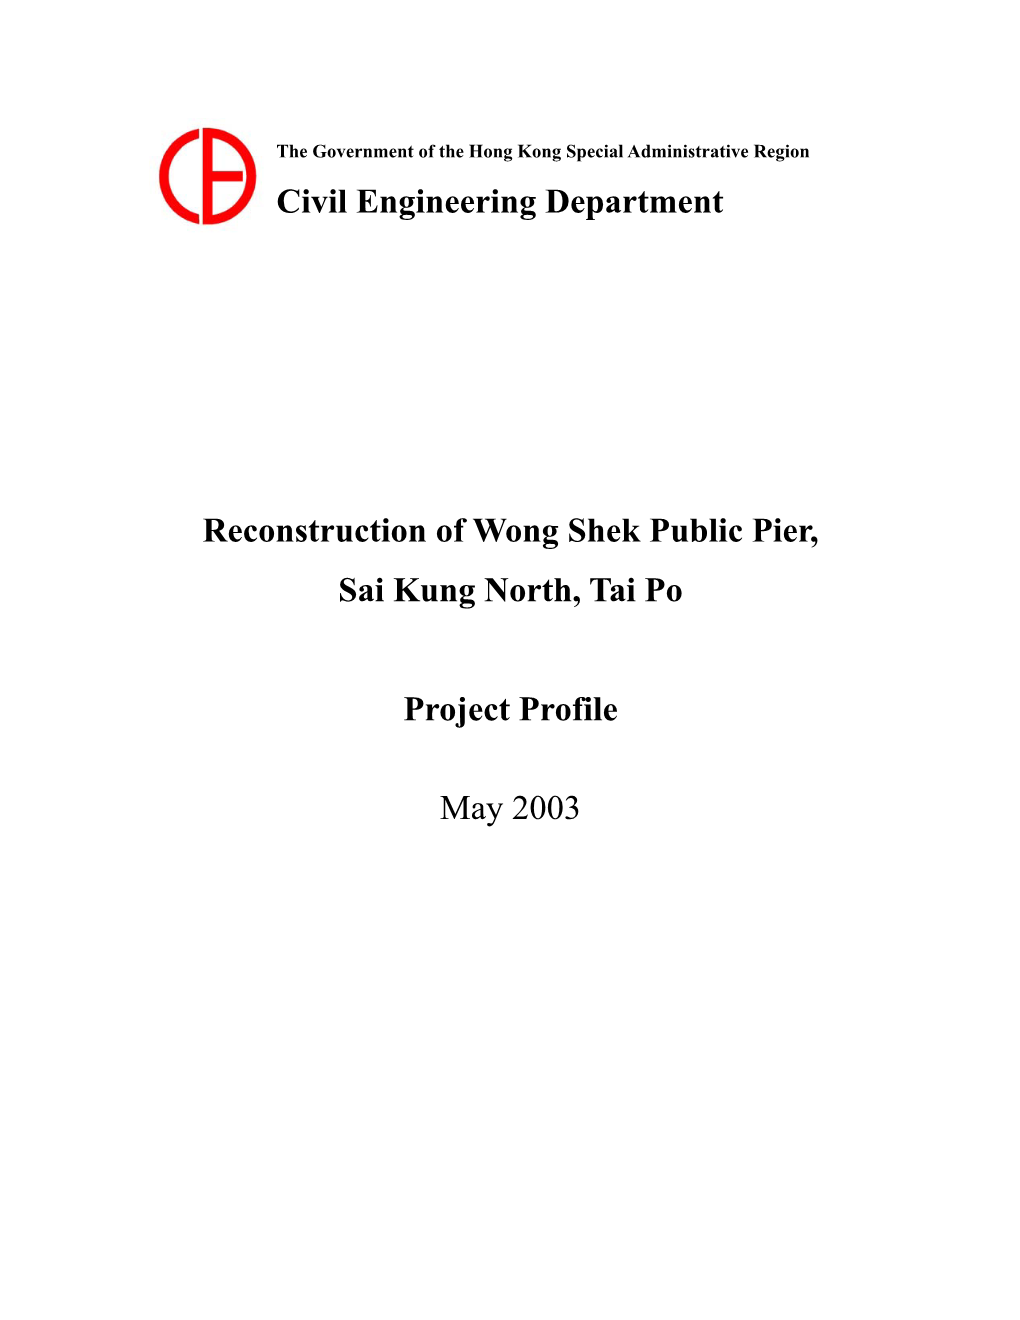 Reconstruction of Wong Shek Public Pier, Sai Kung North, Tai Po Project Profile May 2003 Civil Engineering Department